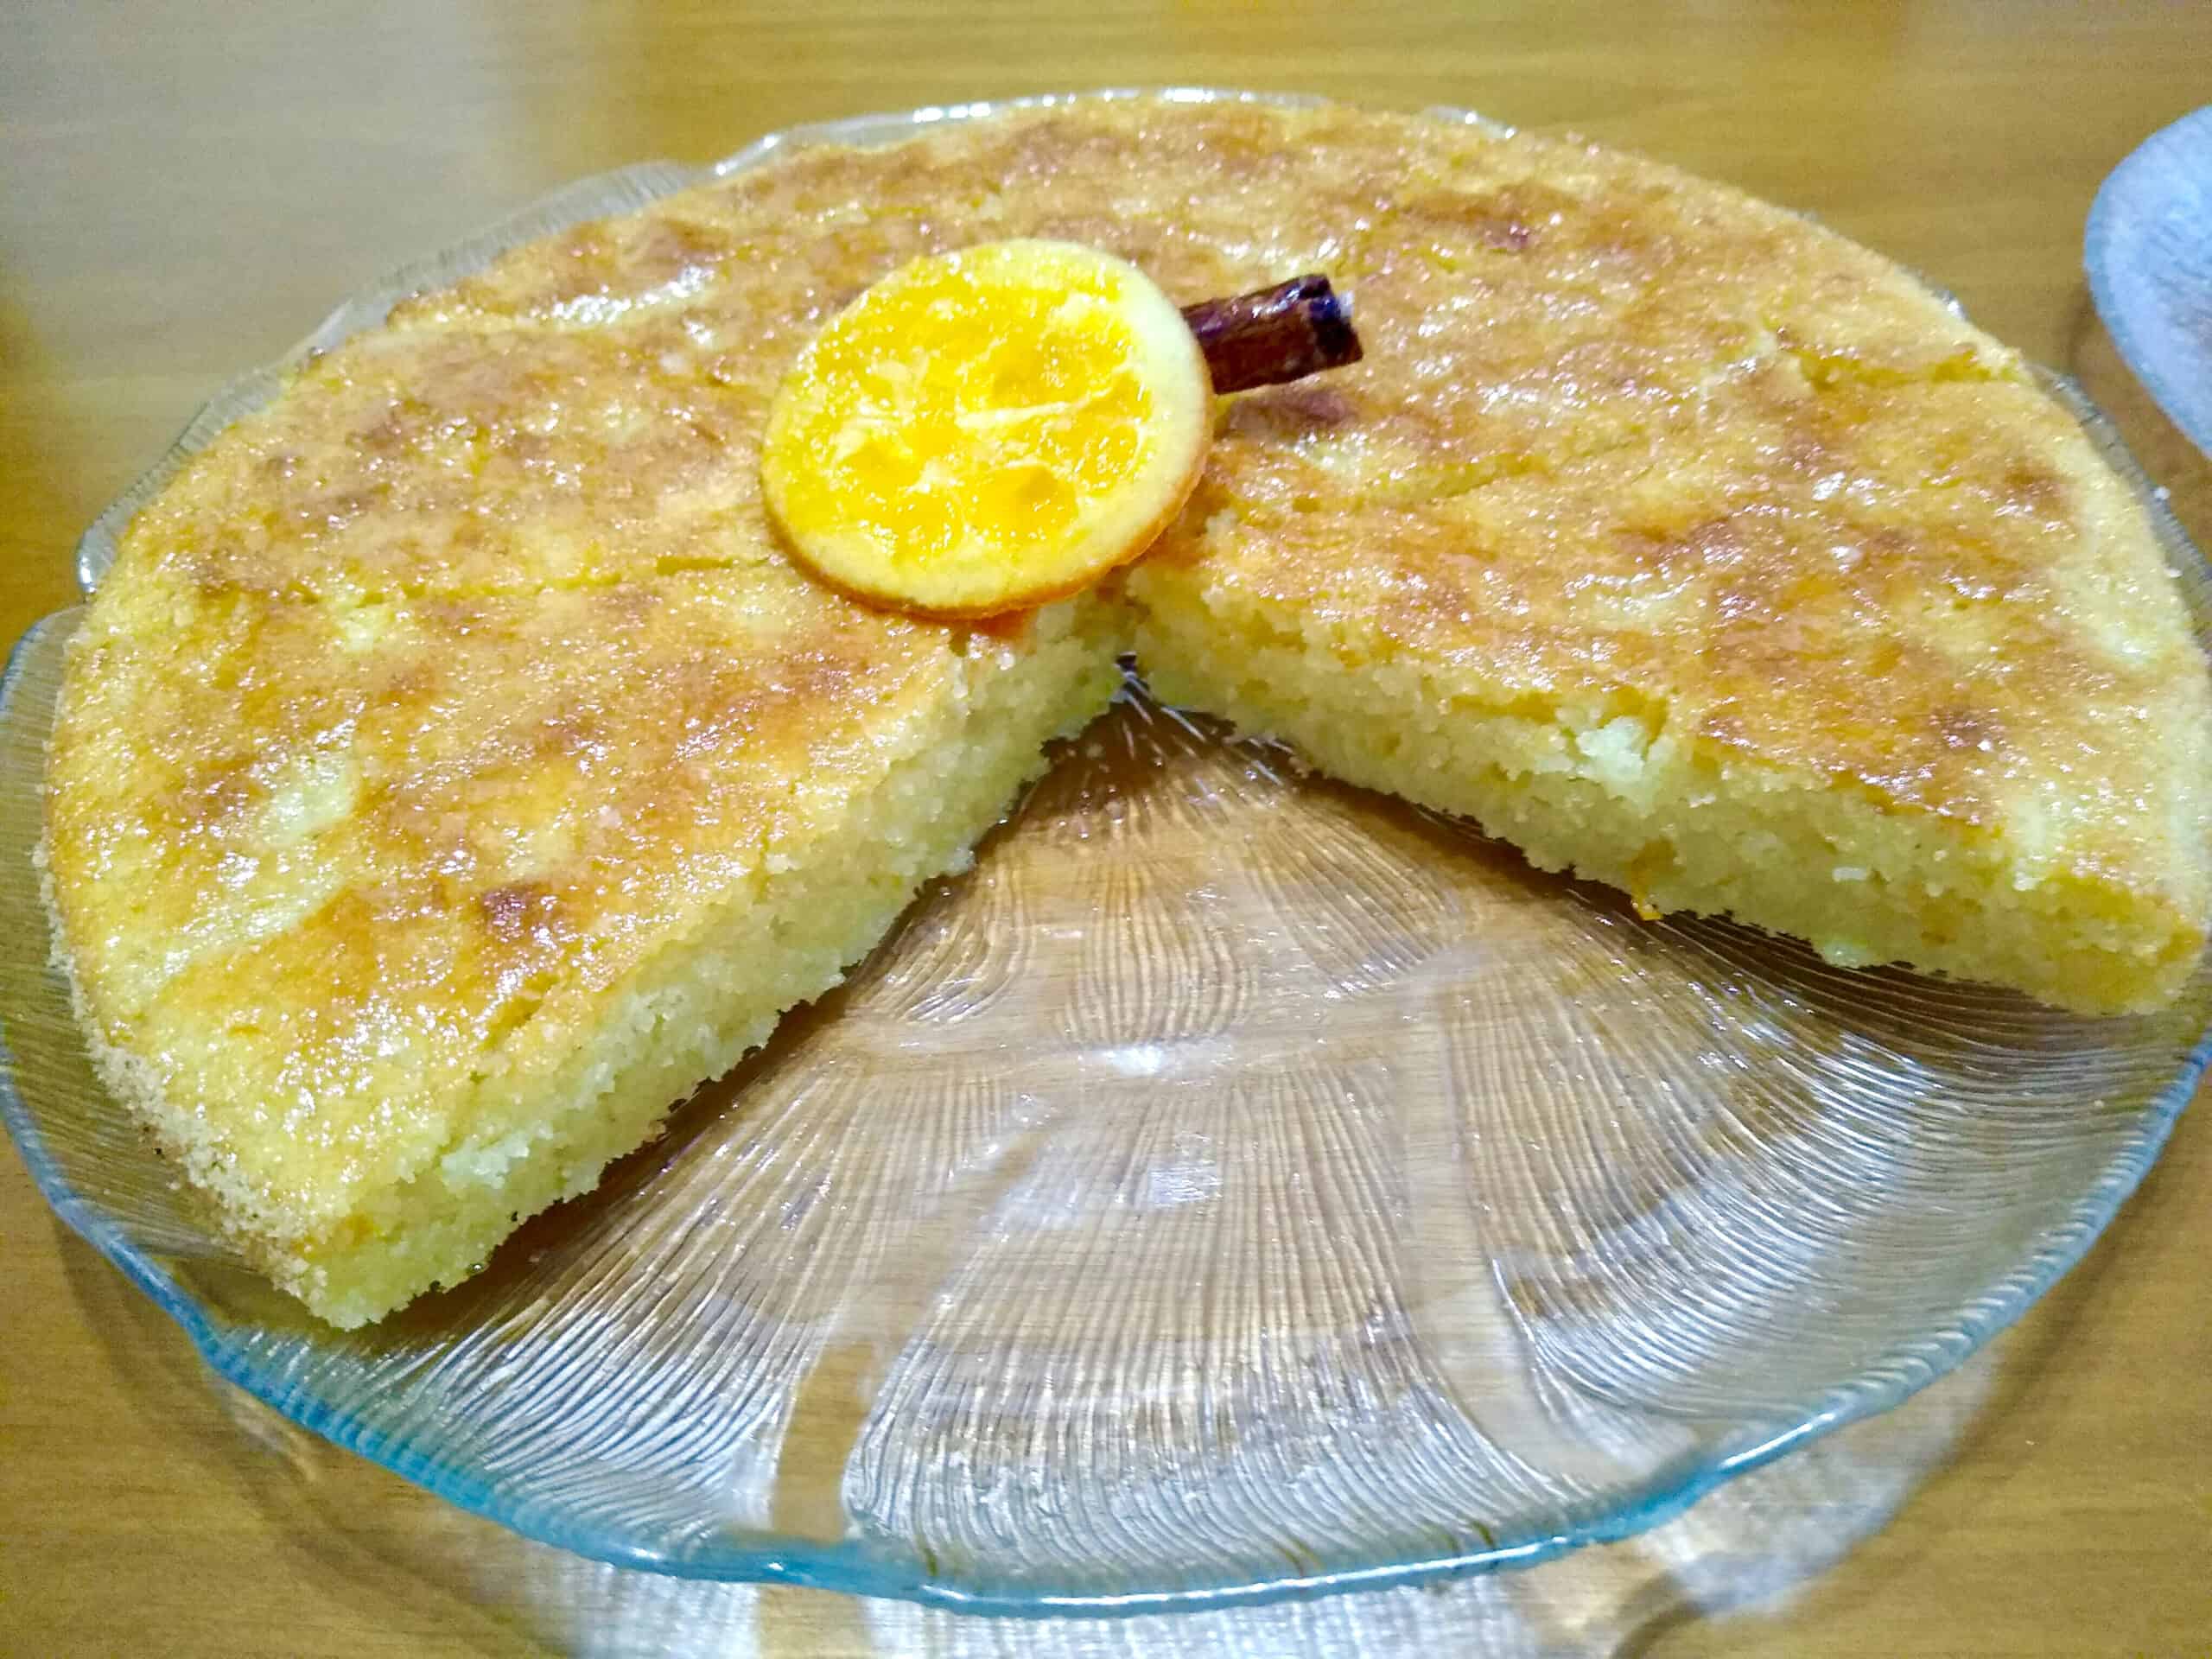 Samali (Mastic flavoured Semolina Cake) whole